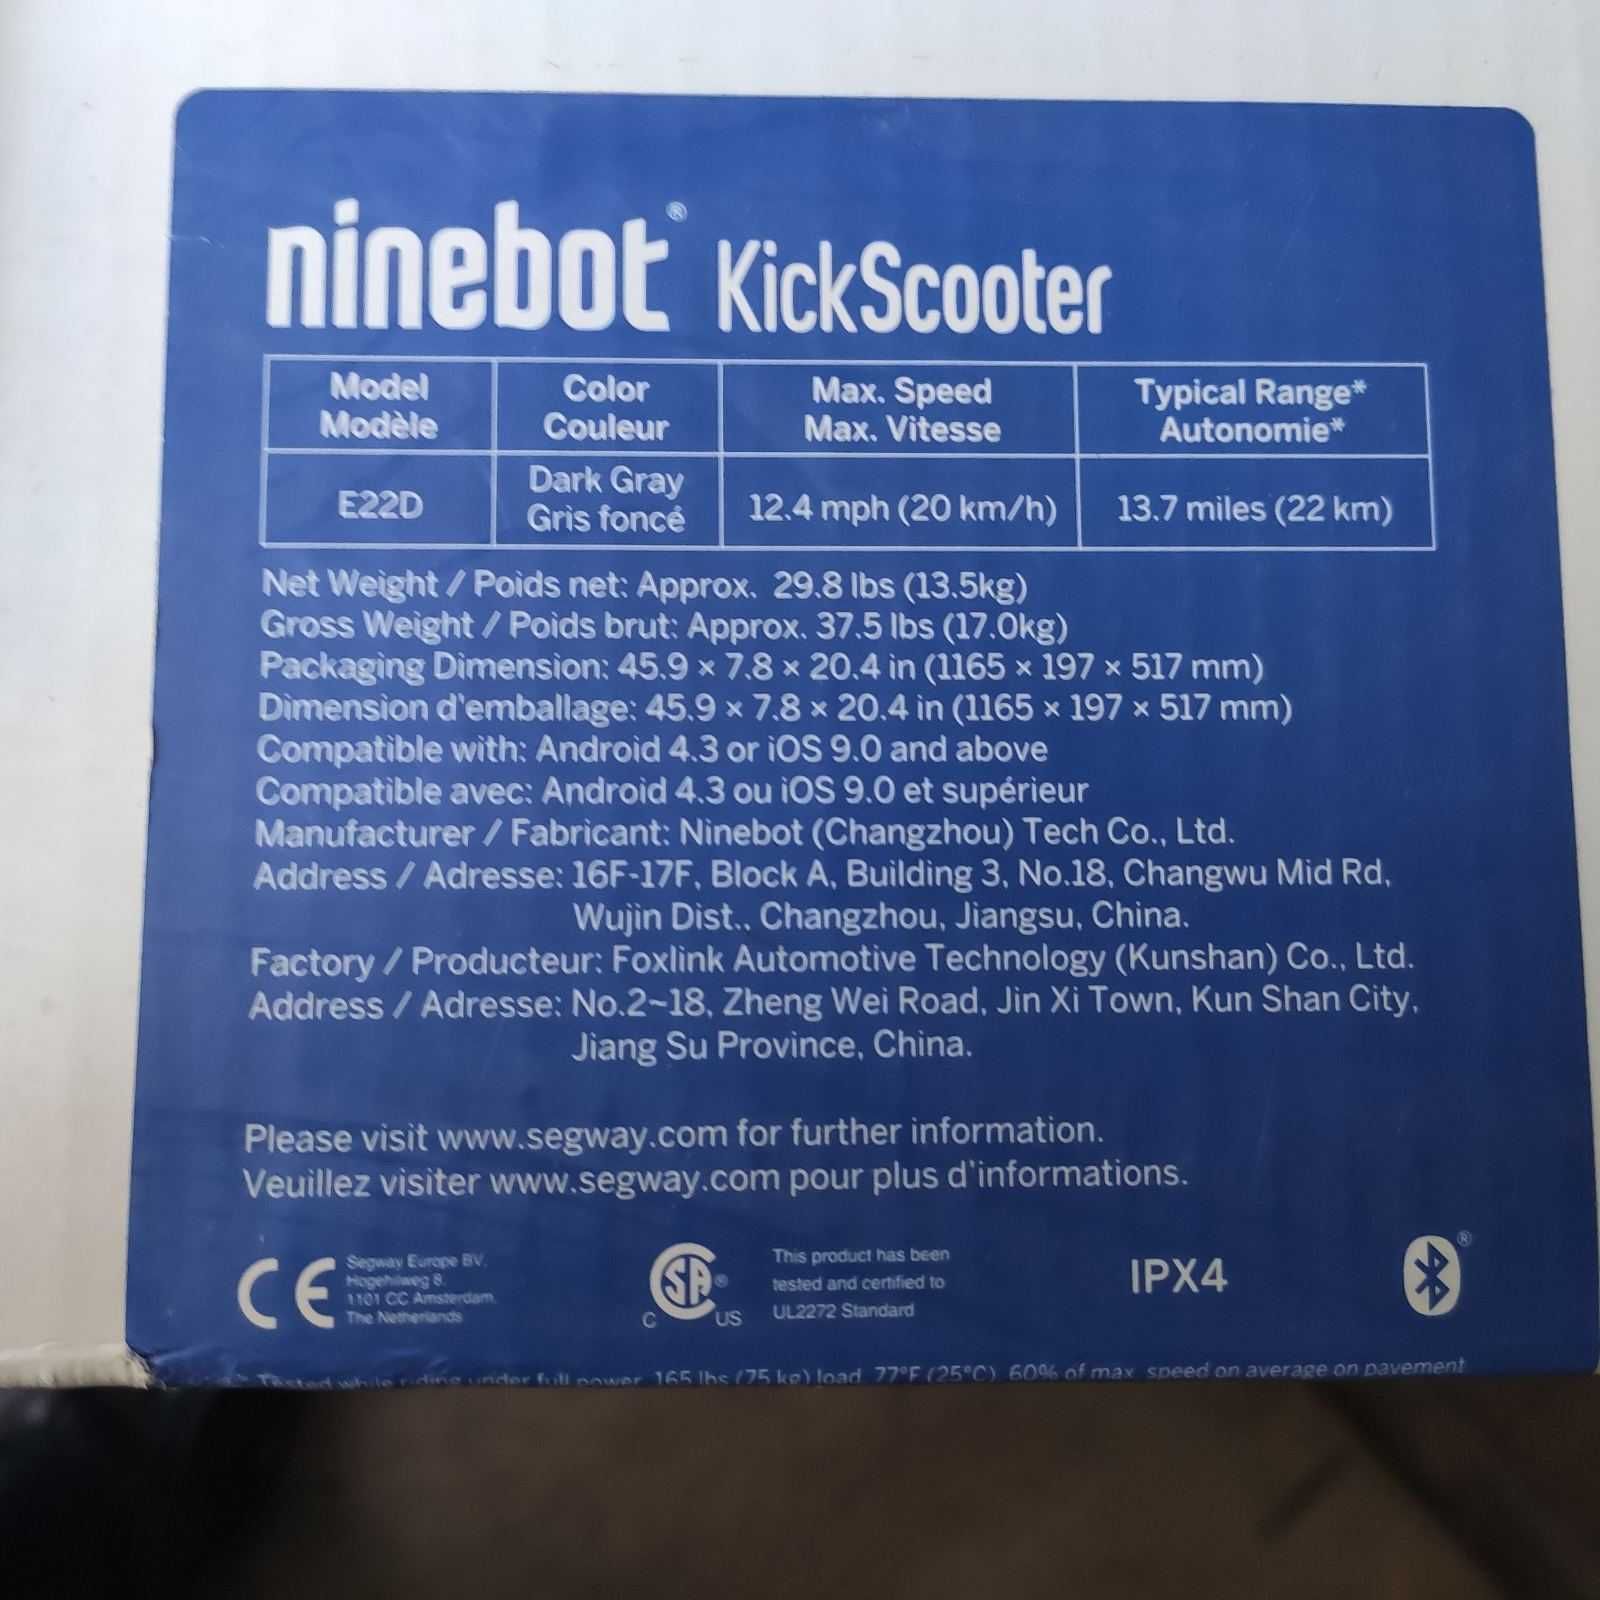 Ninebot KickScooter E22D